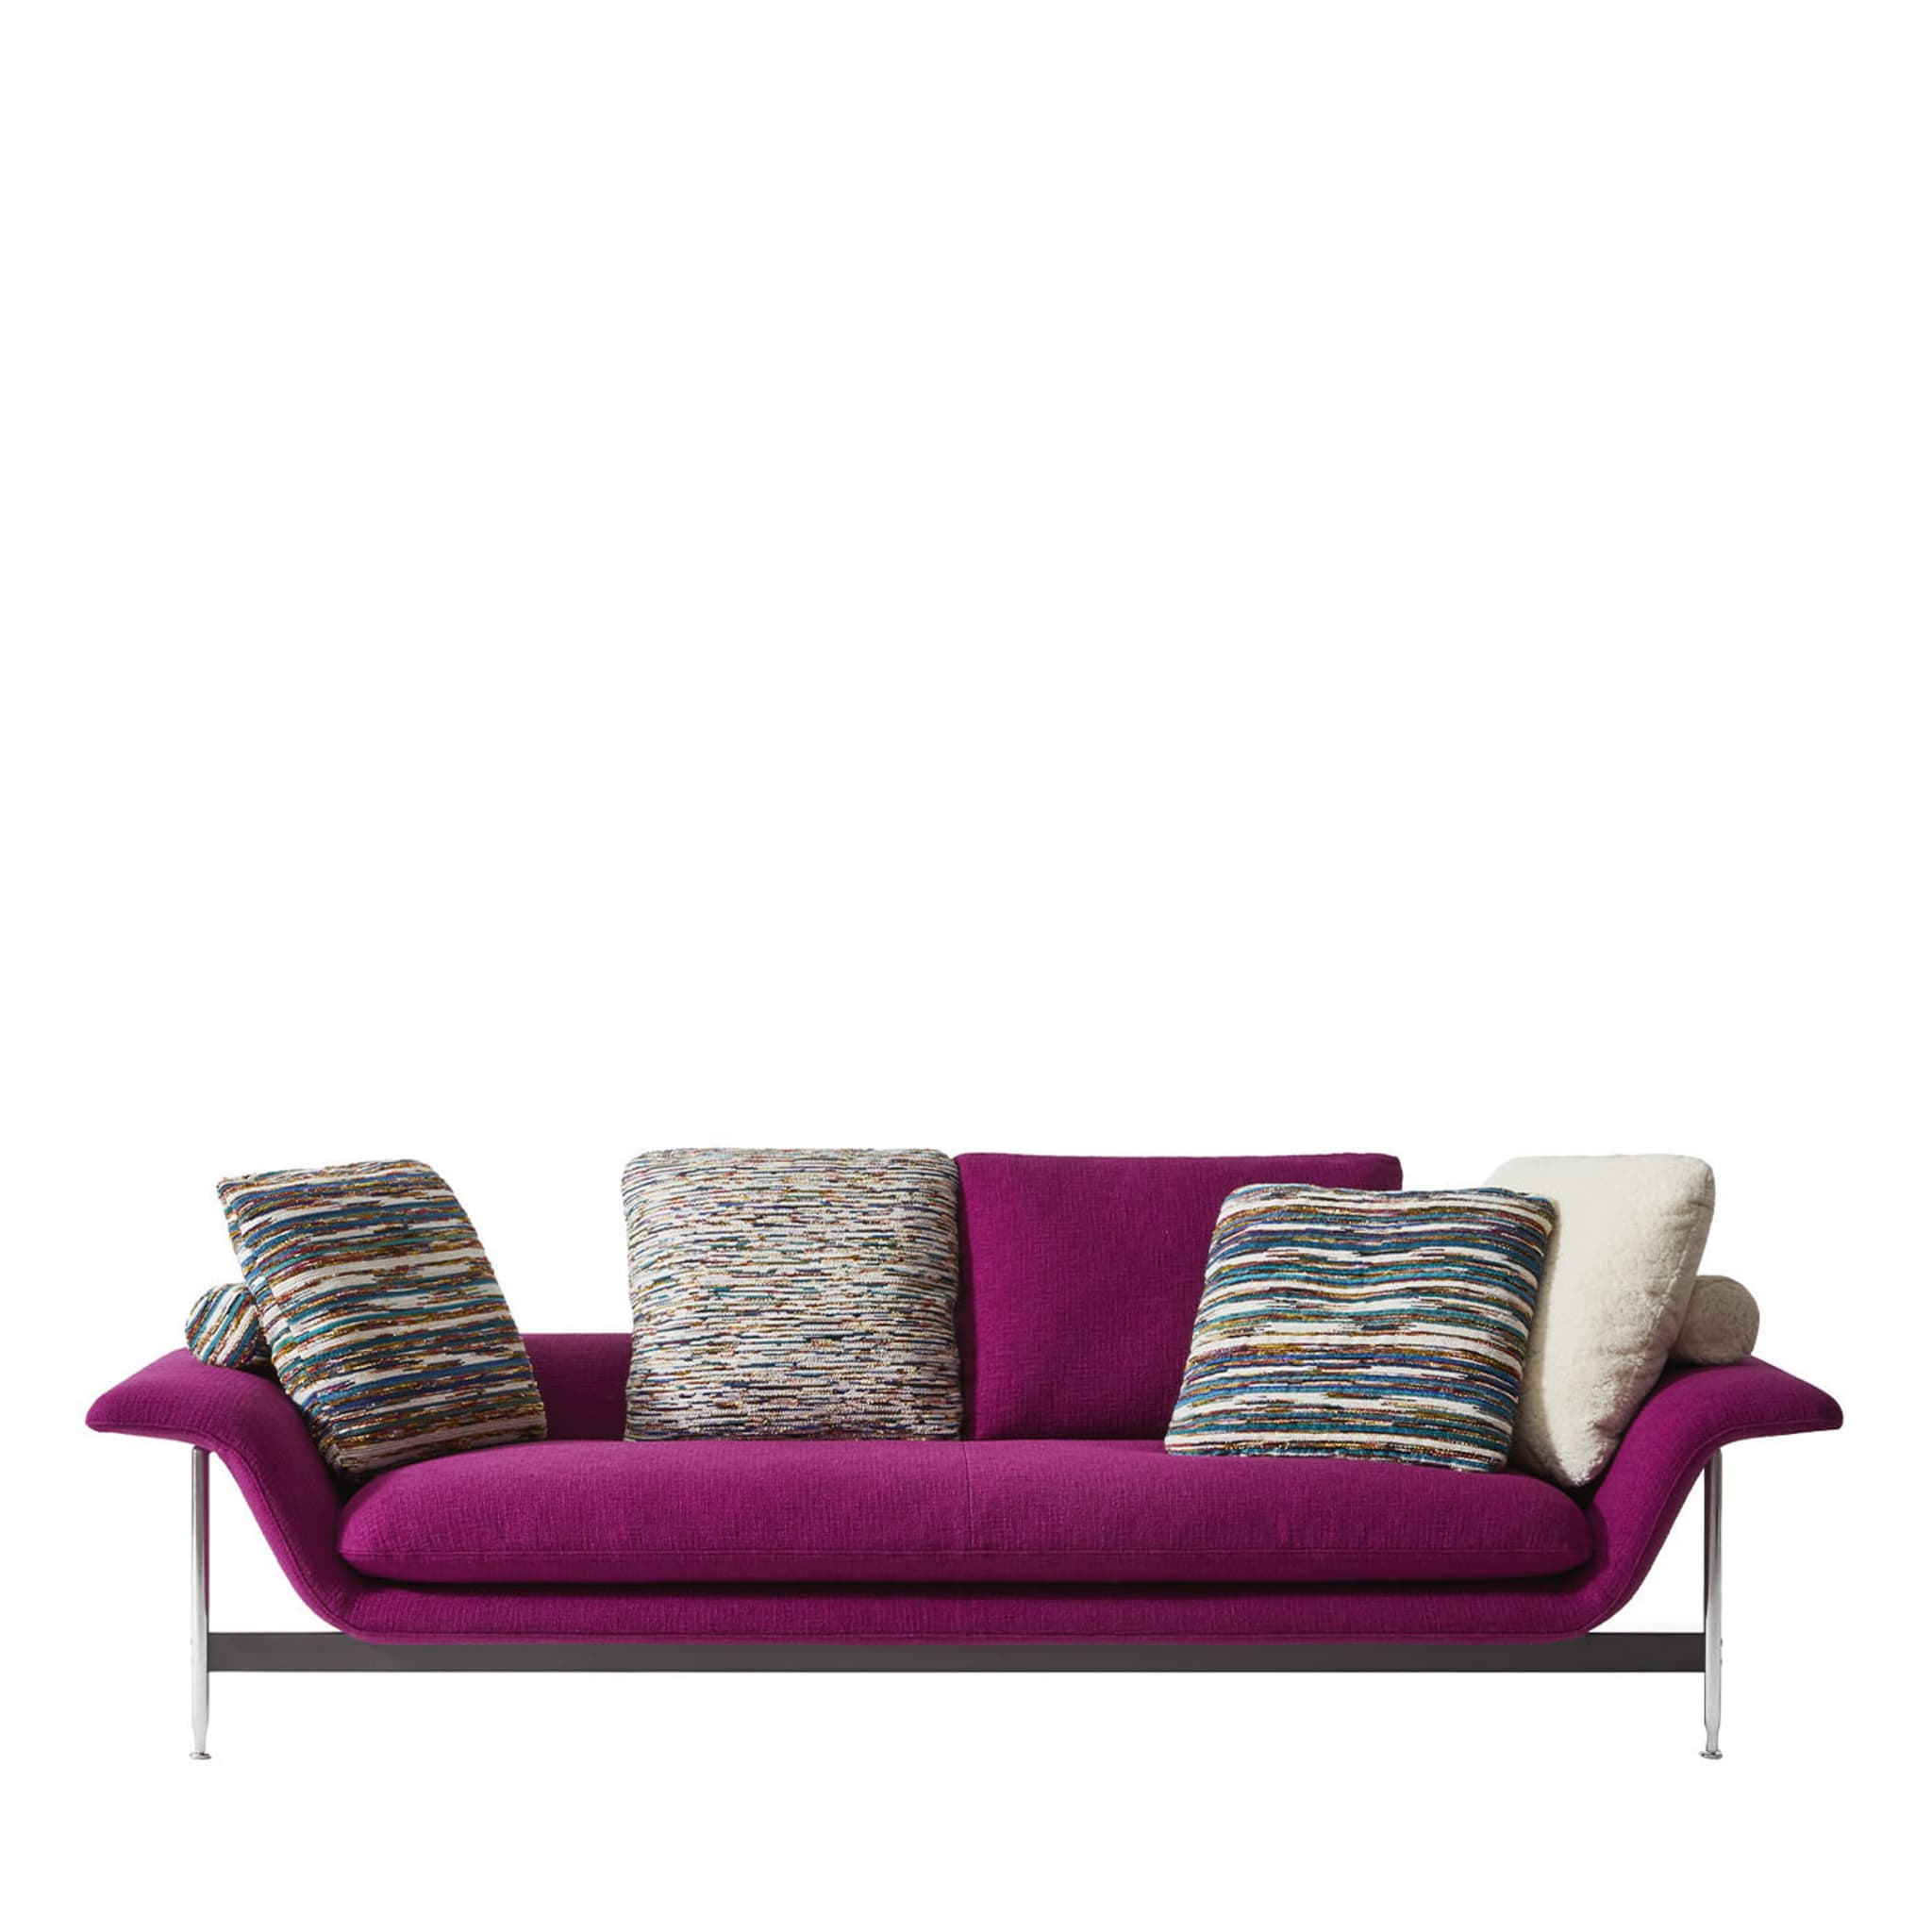 Esosoft 3-Seater Purple Sofa by Antonio Citterio - Main view